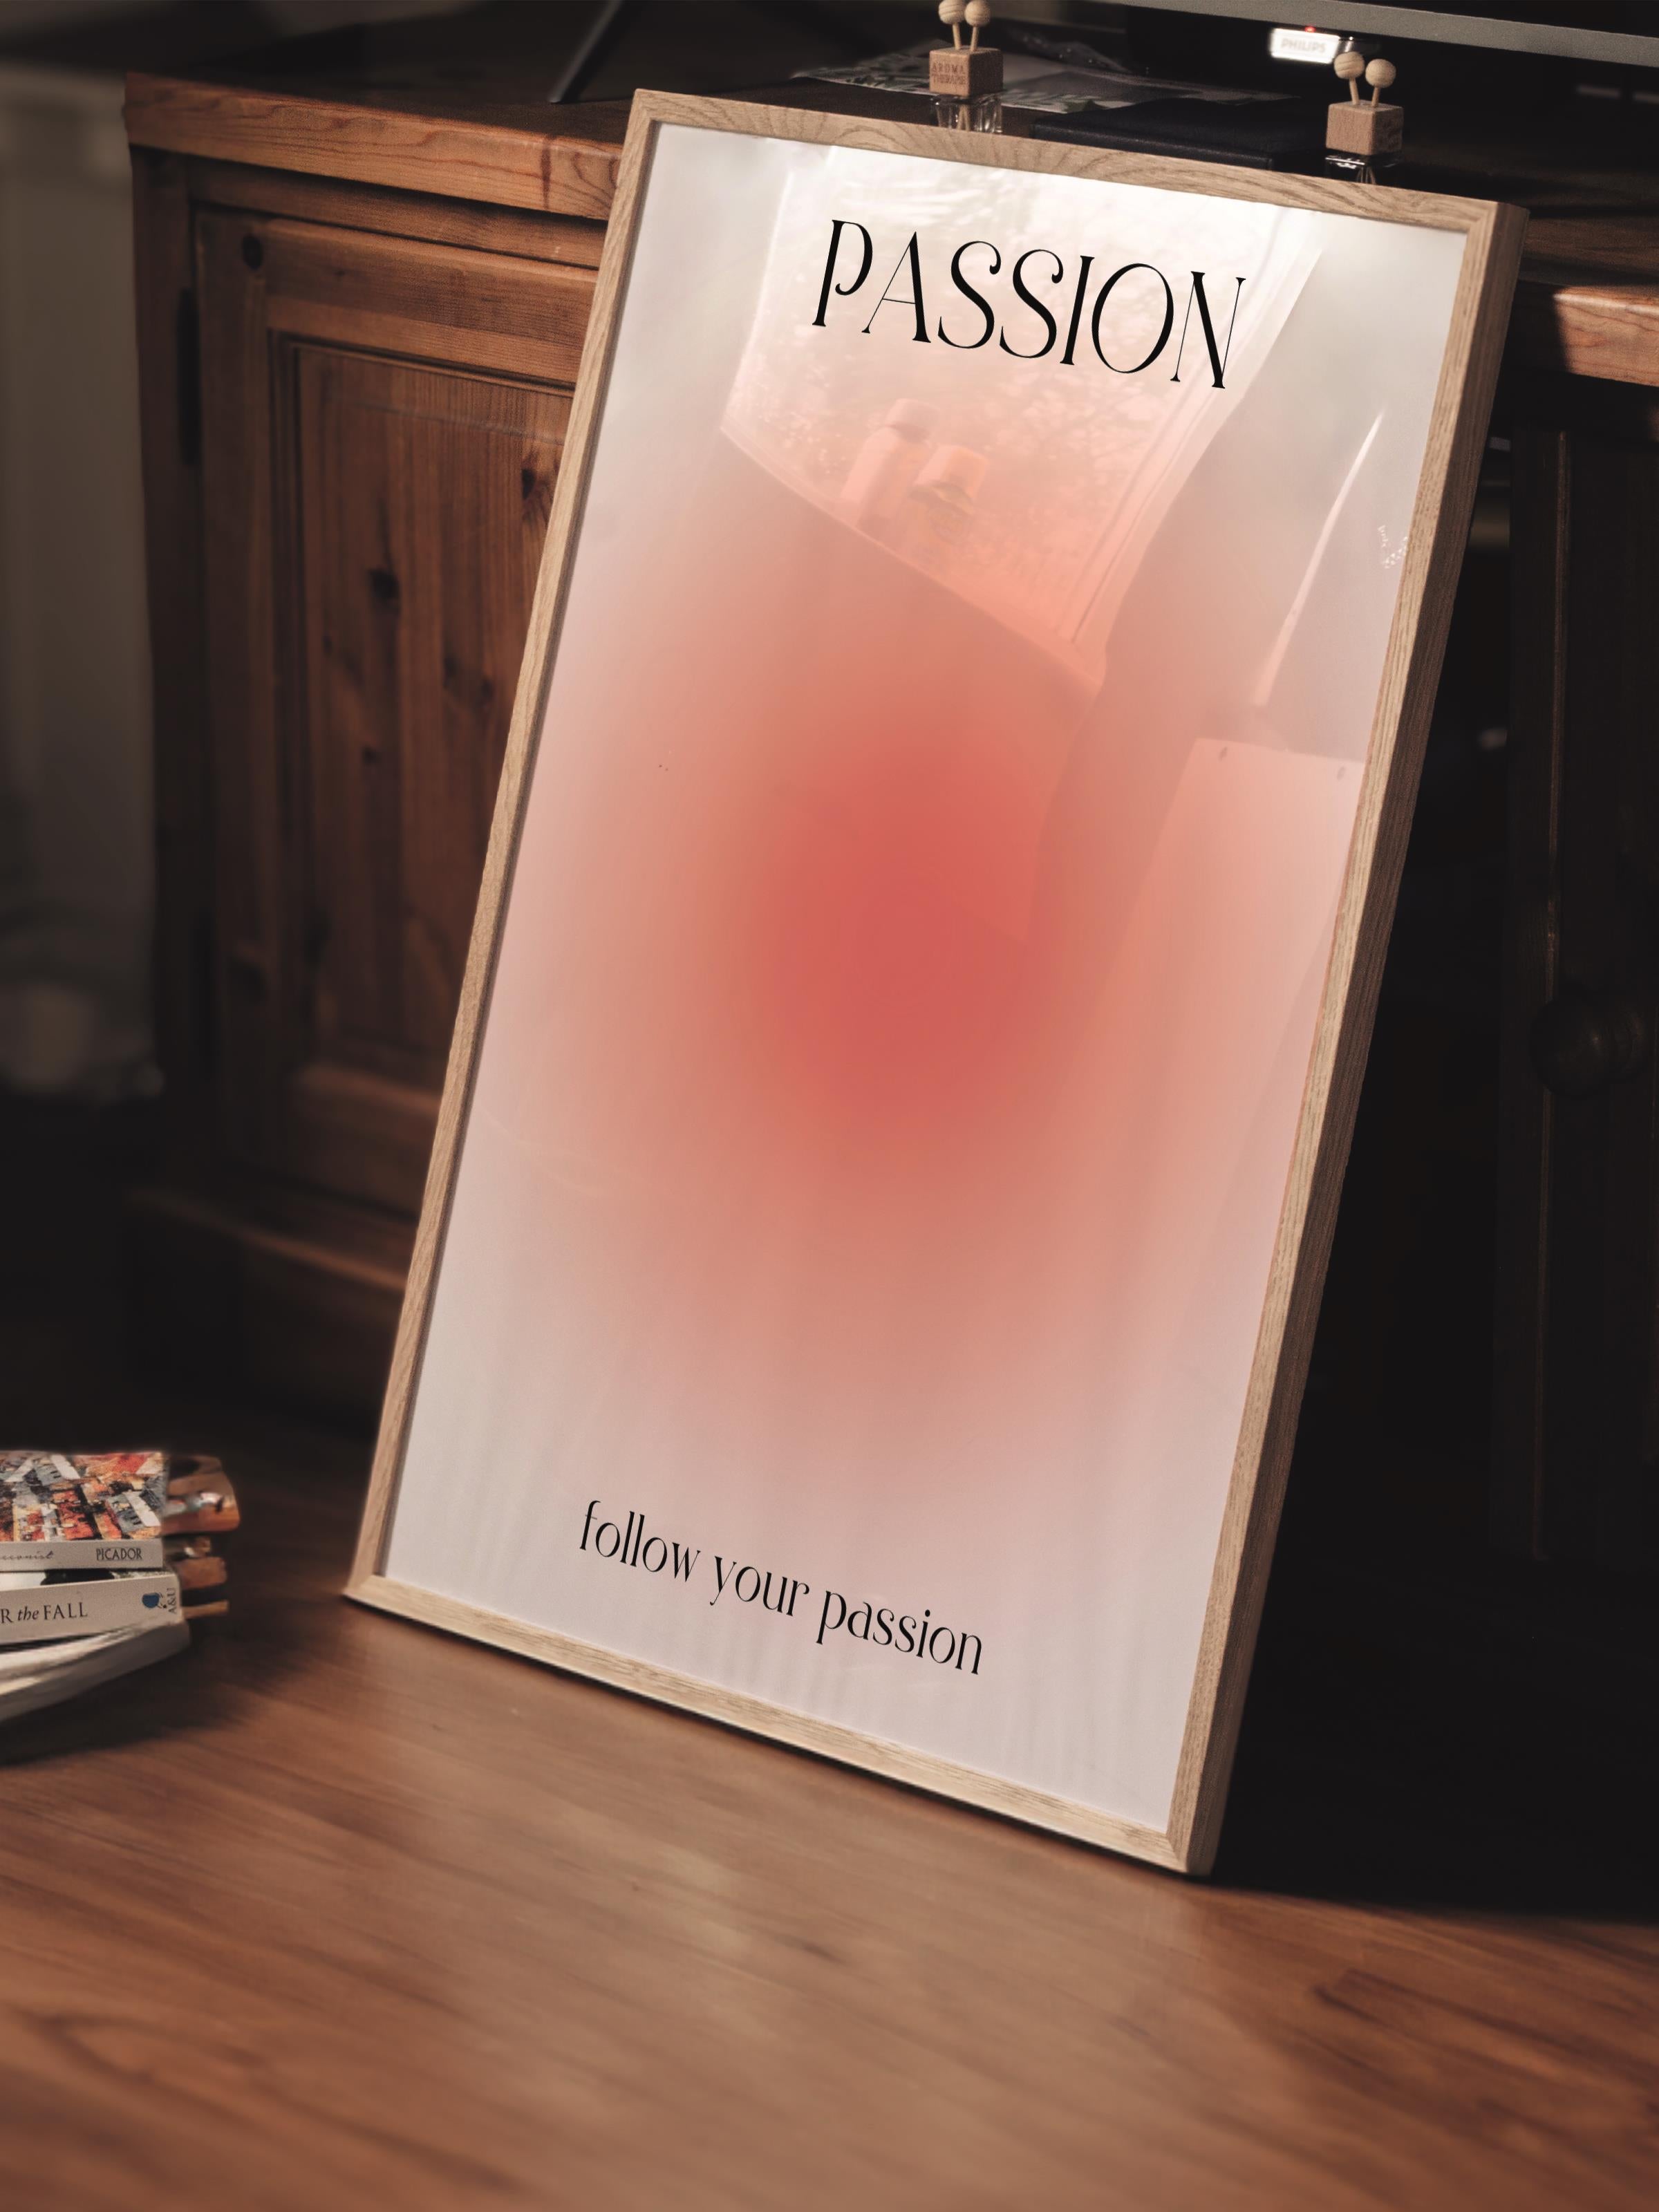 Çerçevesiz Poster, Aura Serisi NO:114 - Passion Pastel Turuncu, Melek Numaraları, Renkli Poster